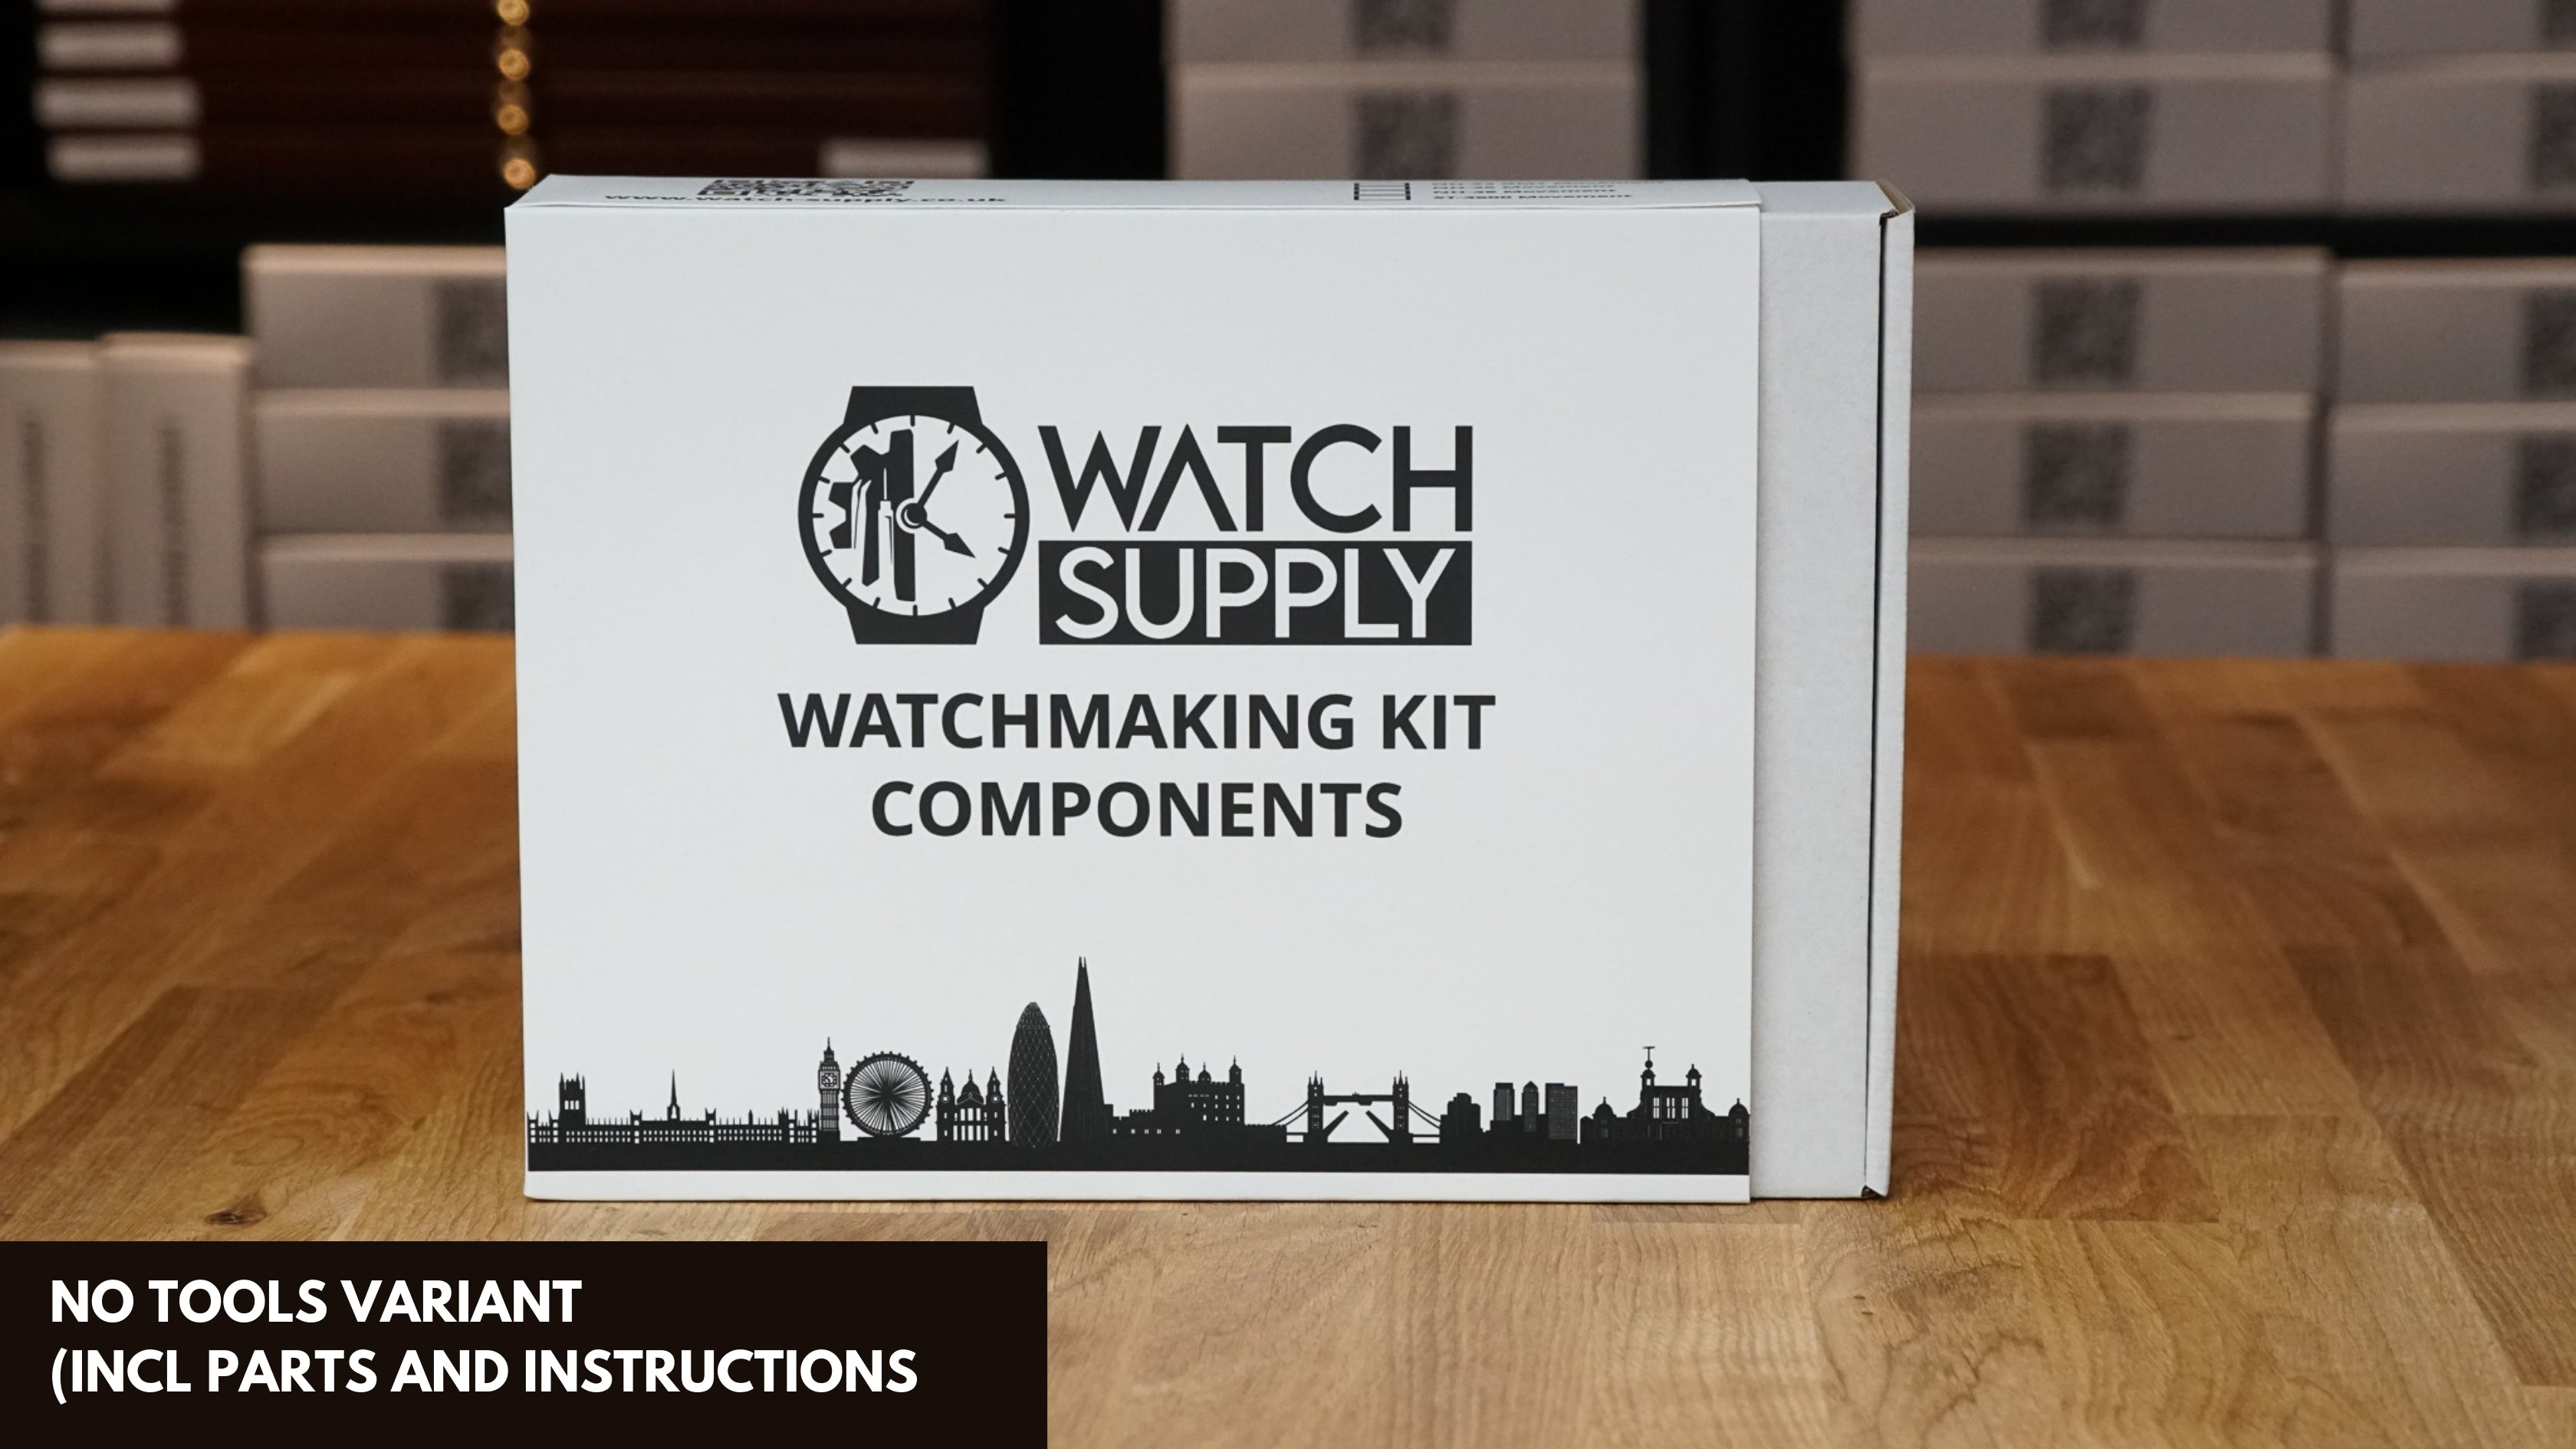 Watchmaking kit - Tool watch - 36mm case - Ref. 23241